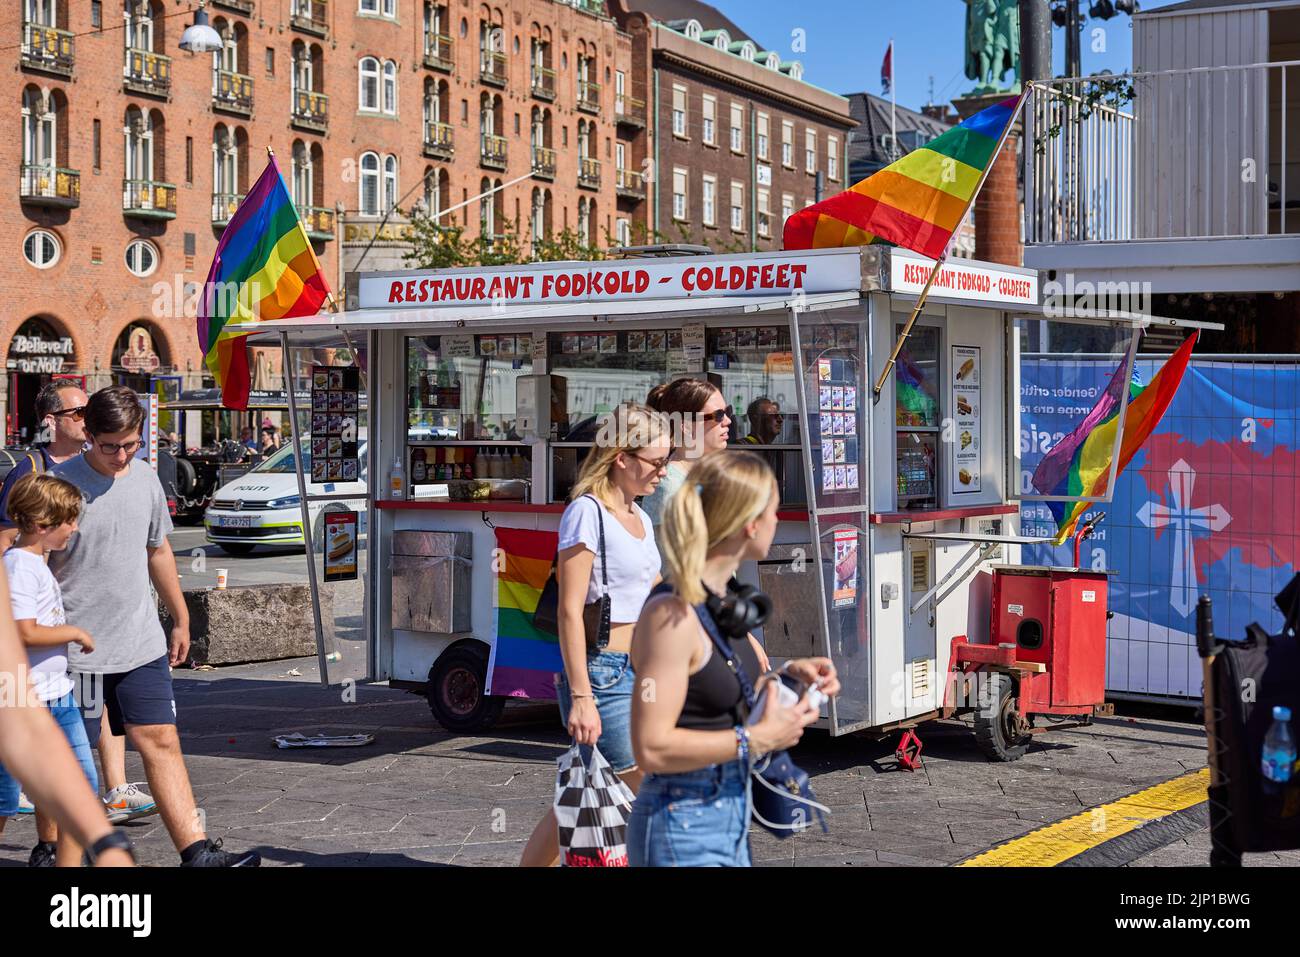 Restaurant Fodkold (Restaurant Coldfeet), Danish sausage wagon with rainbow flags during Copenhagen Pride; Copenhagen, Denmark Stock Photo